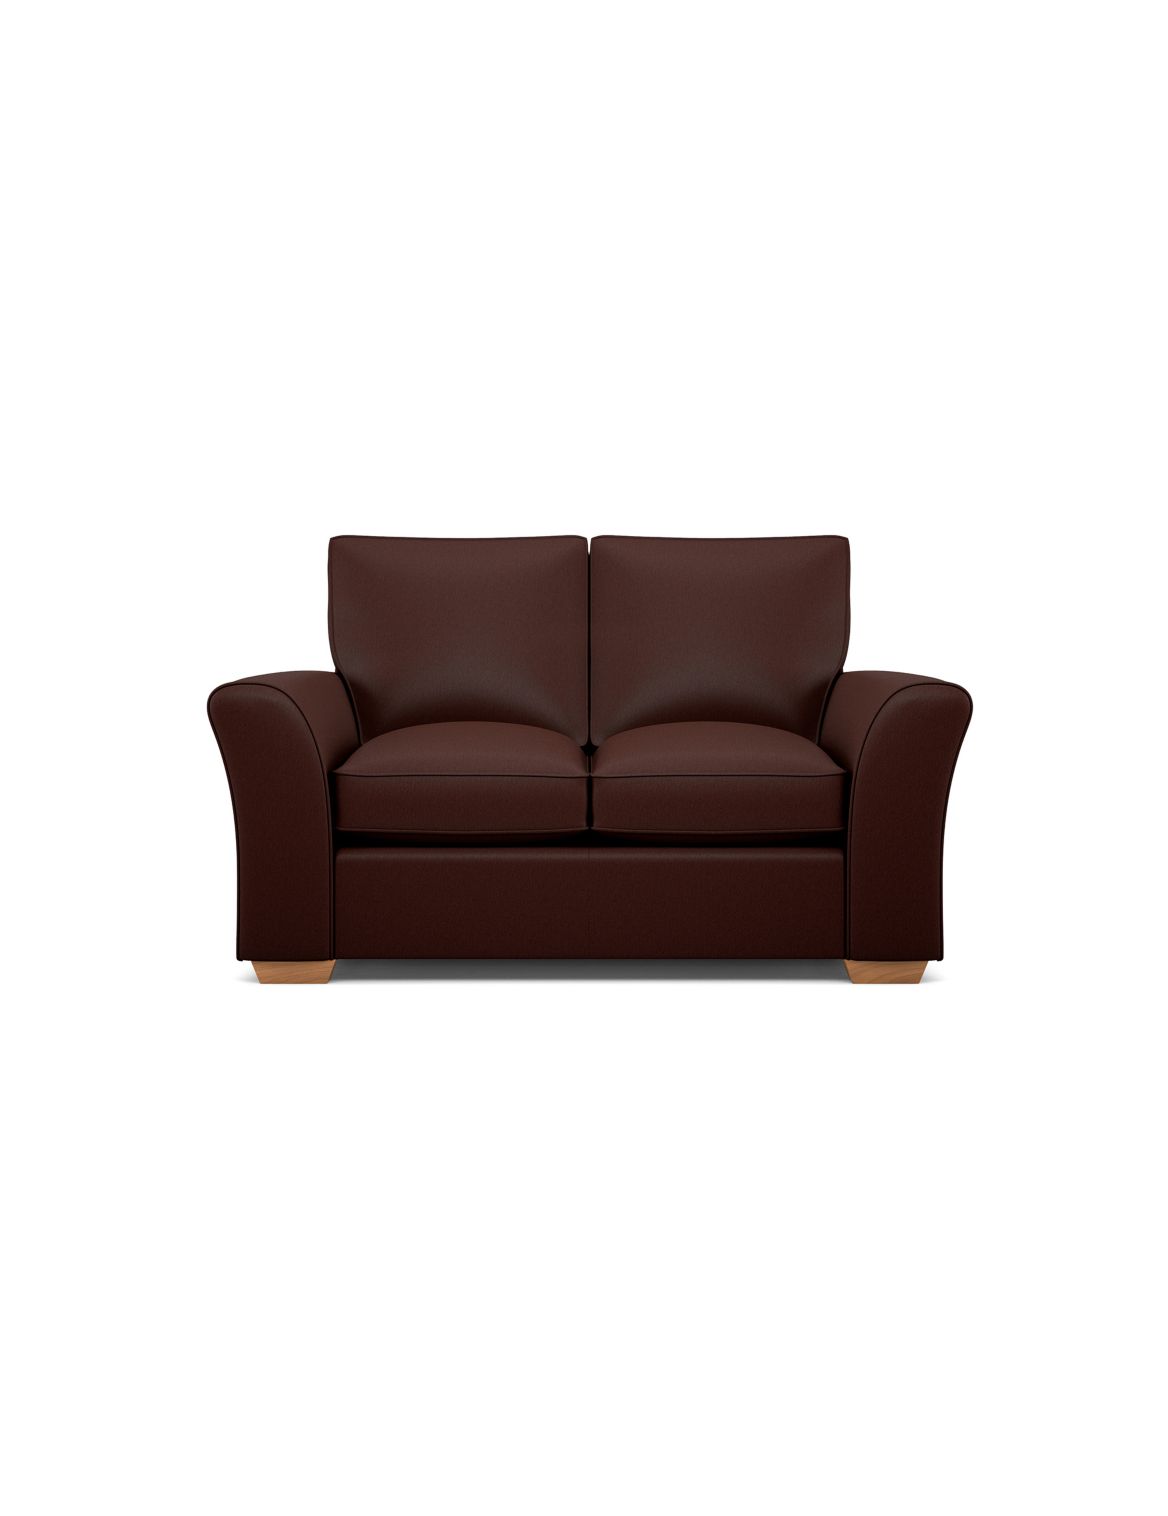 Lincoln Compact Sofa brown